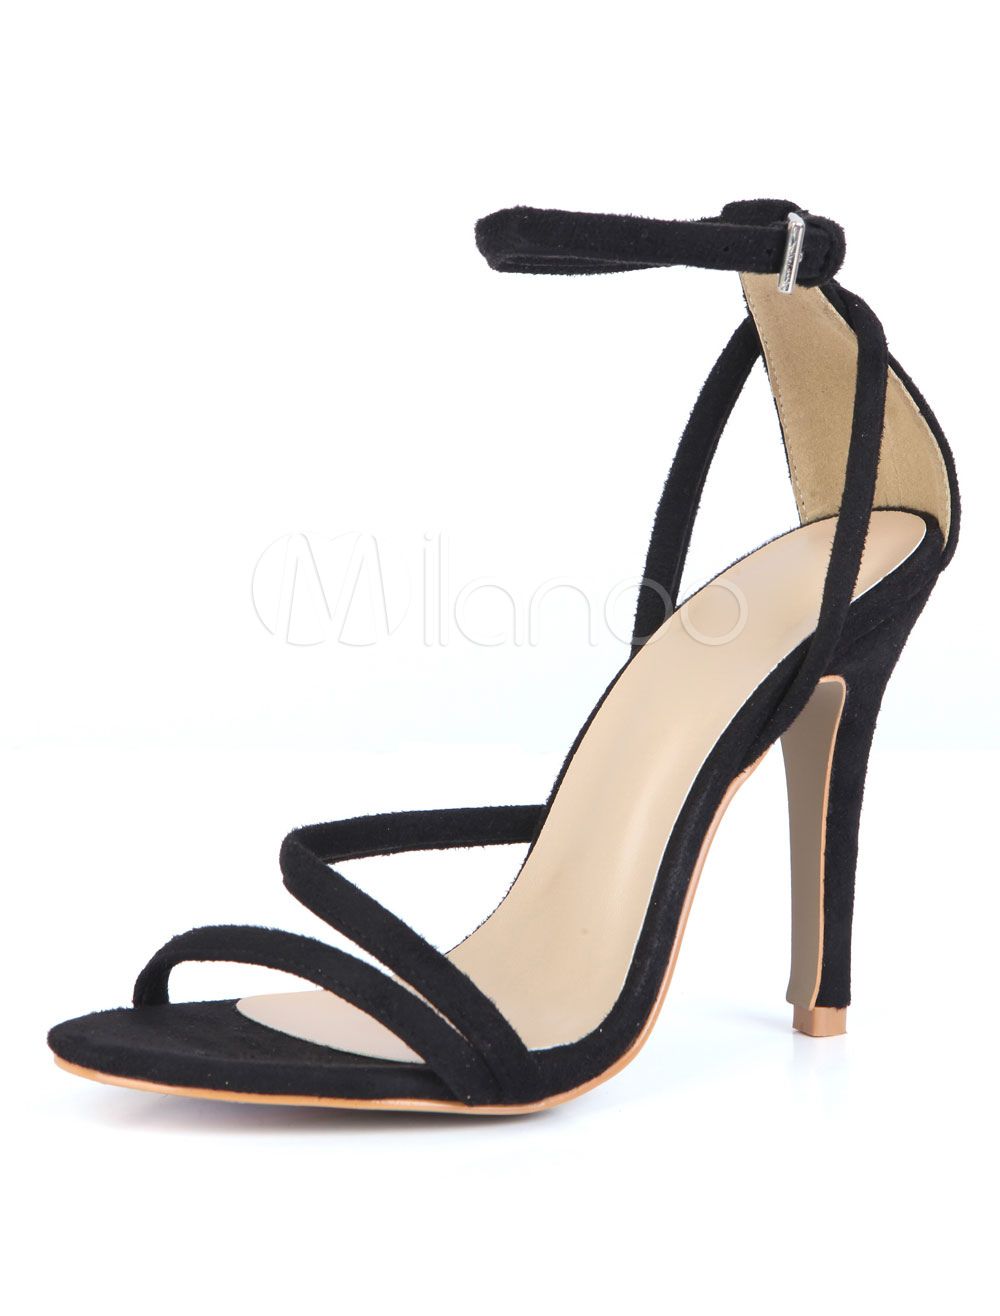 Black Sandal Shoes High Heel Stiletto Open Toe Suede Ankle Strap Sandals For Women | Milanoo